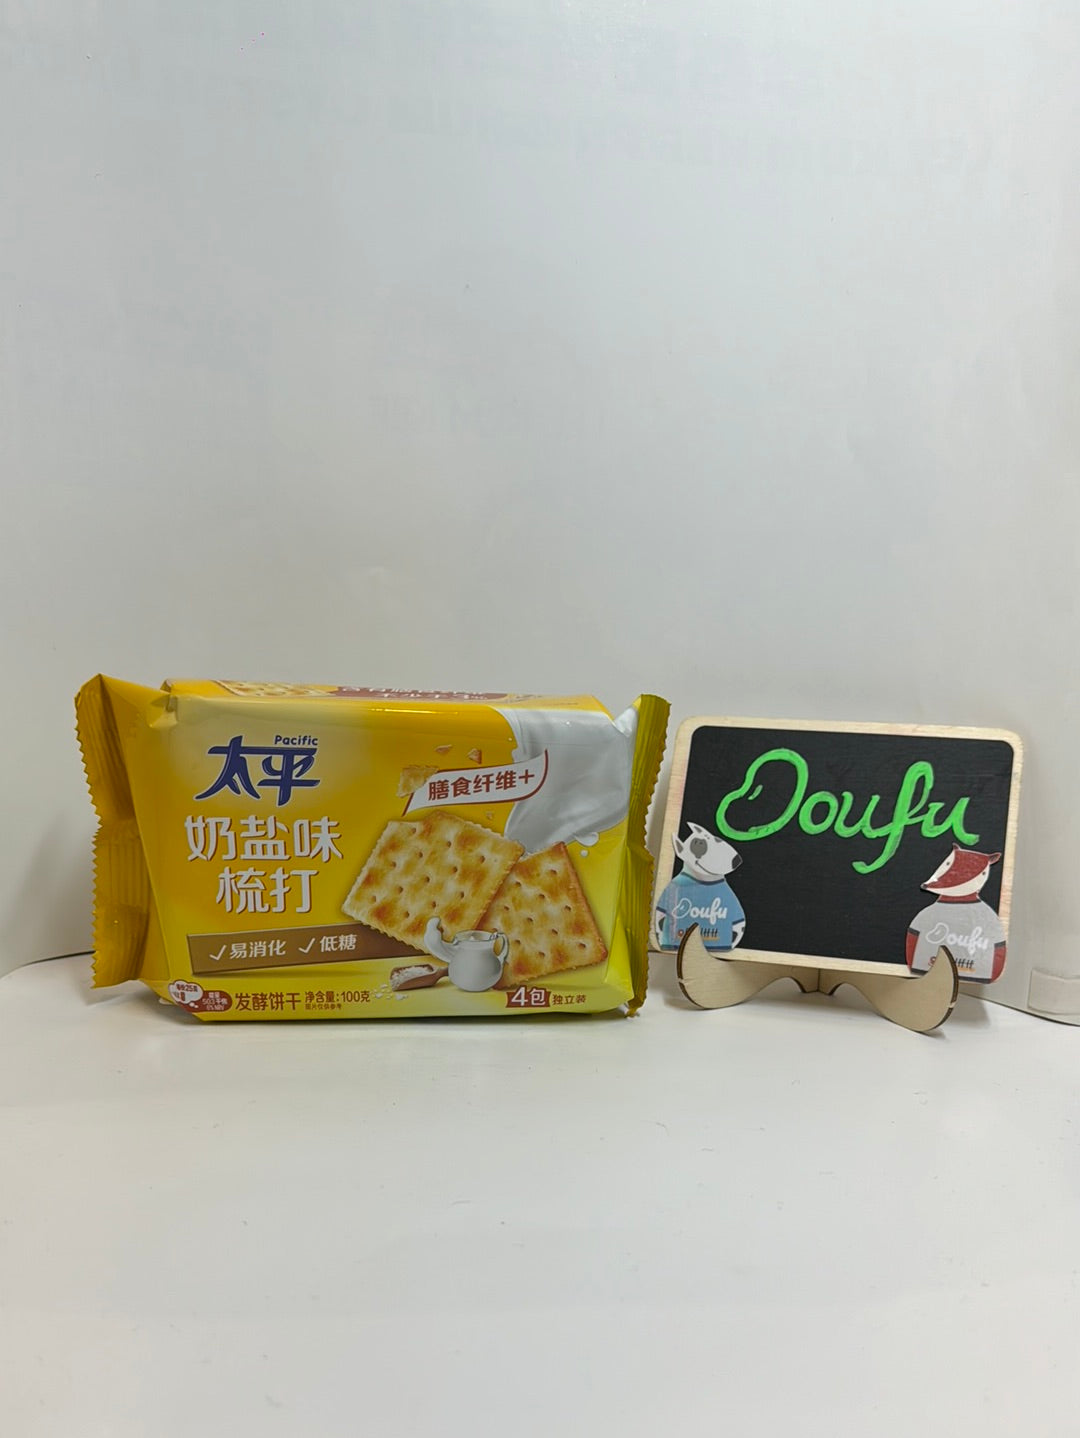 PACIFIC Crackers Salty Milk太平梳打饼干奶盐味100g